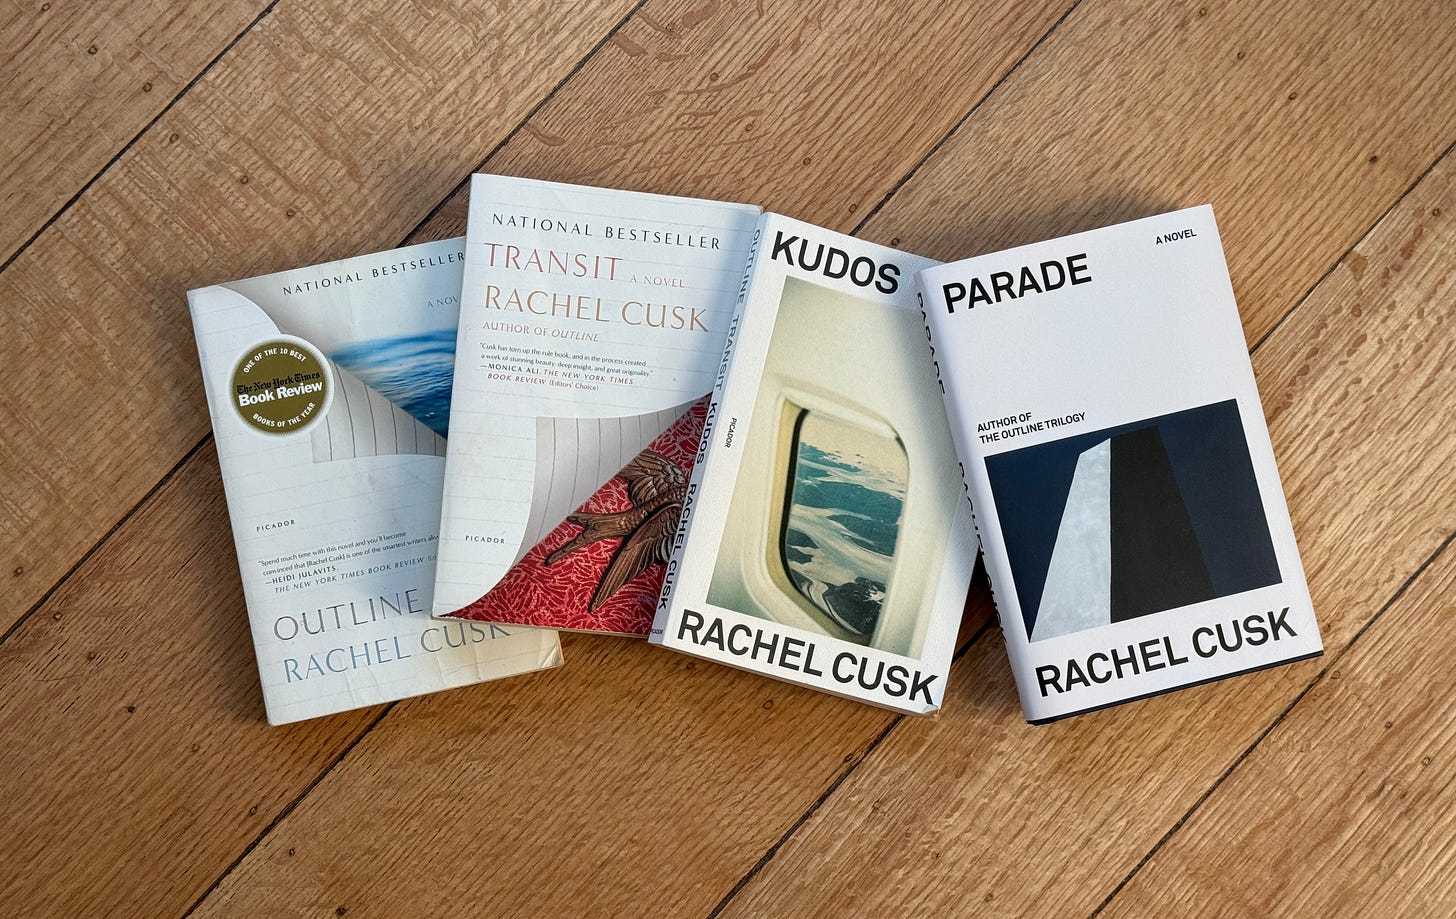 hardwood floor background. Book spread of Outline by Rachel Cusk, Transit by Rachel Cusk, Kudos by Rachel Cusk, and Parade by Rachel Cusk